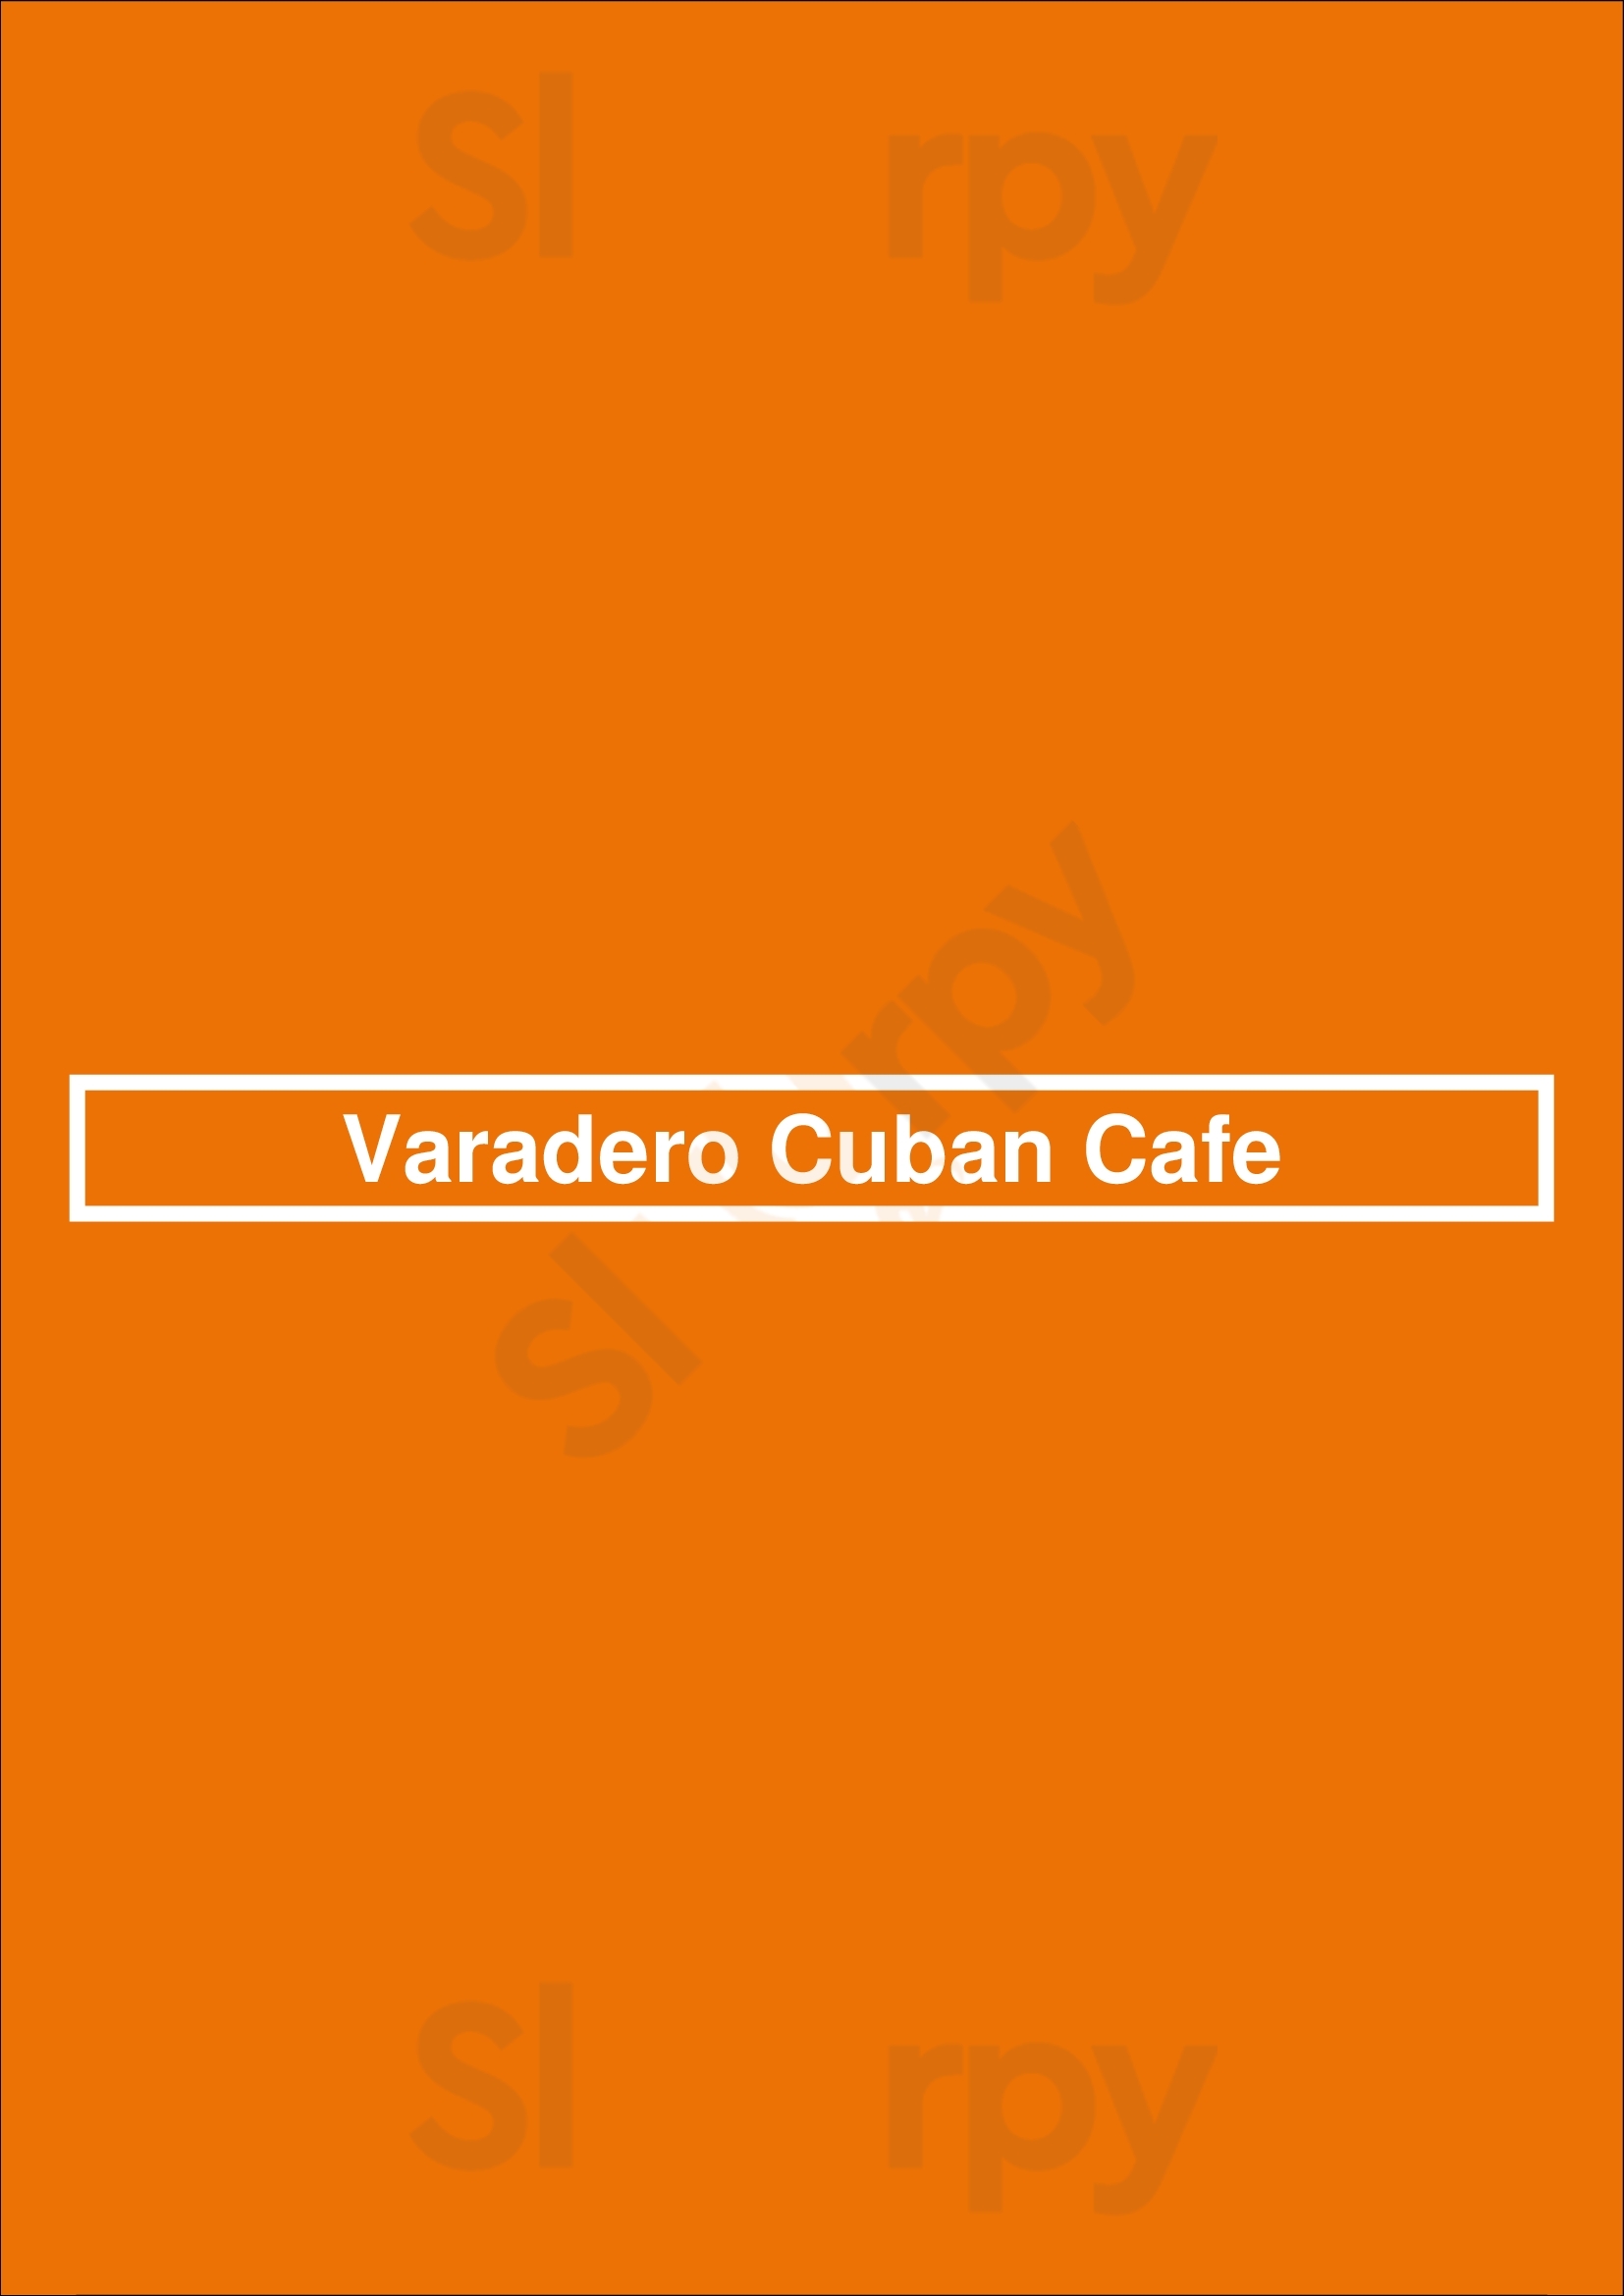 Varadero Cuban Cafe Vancouver Menu - 1